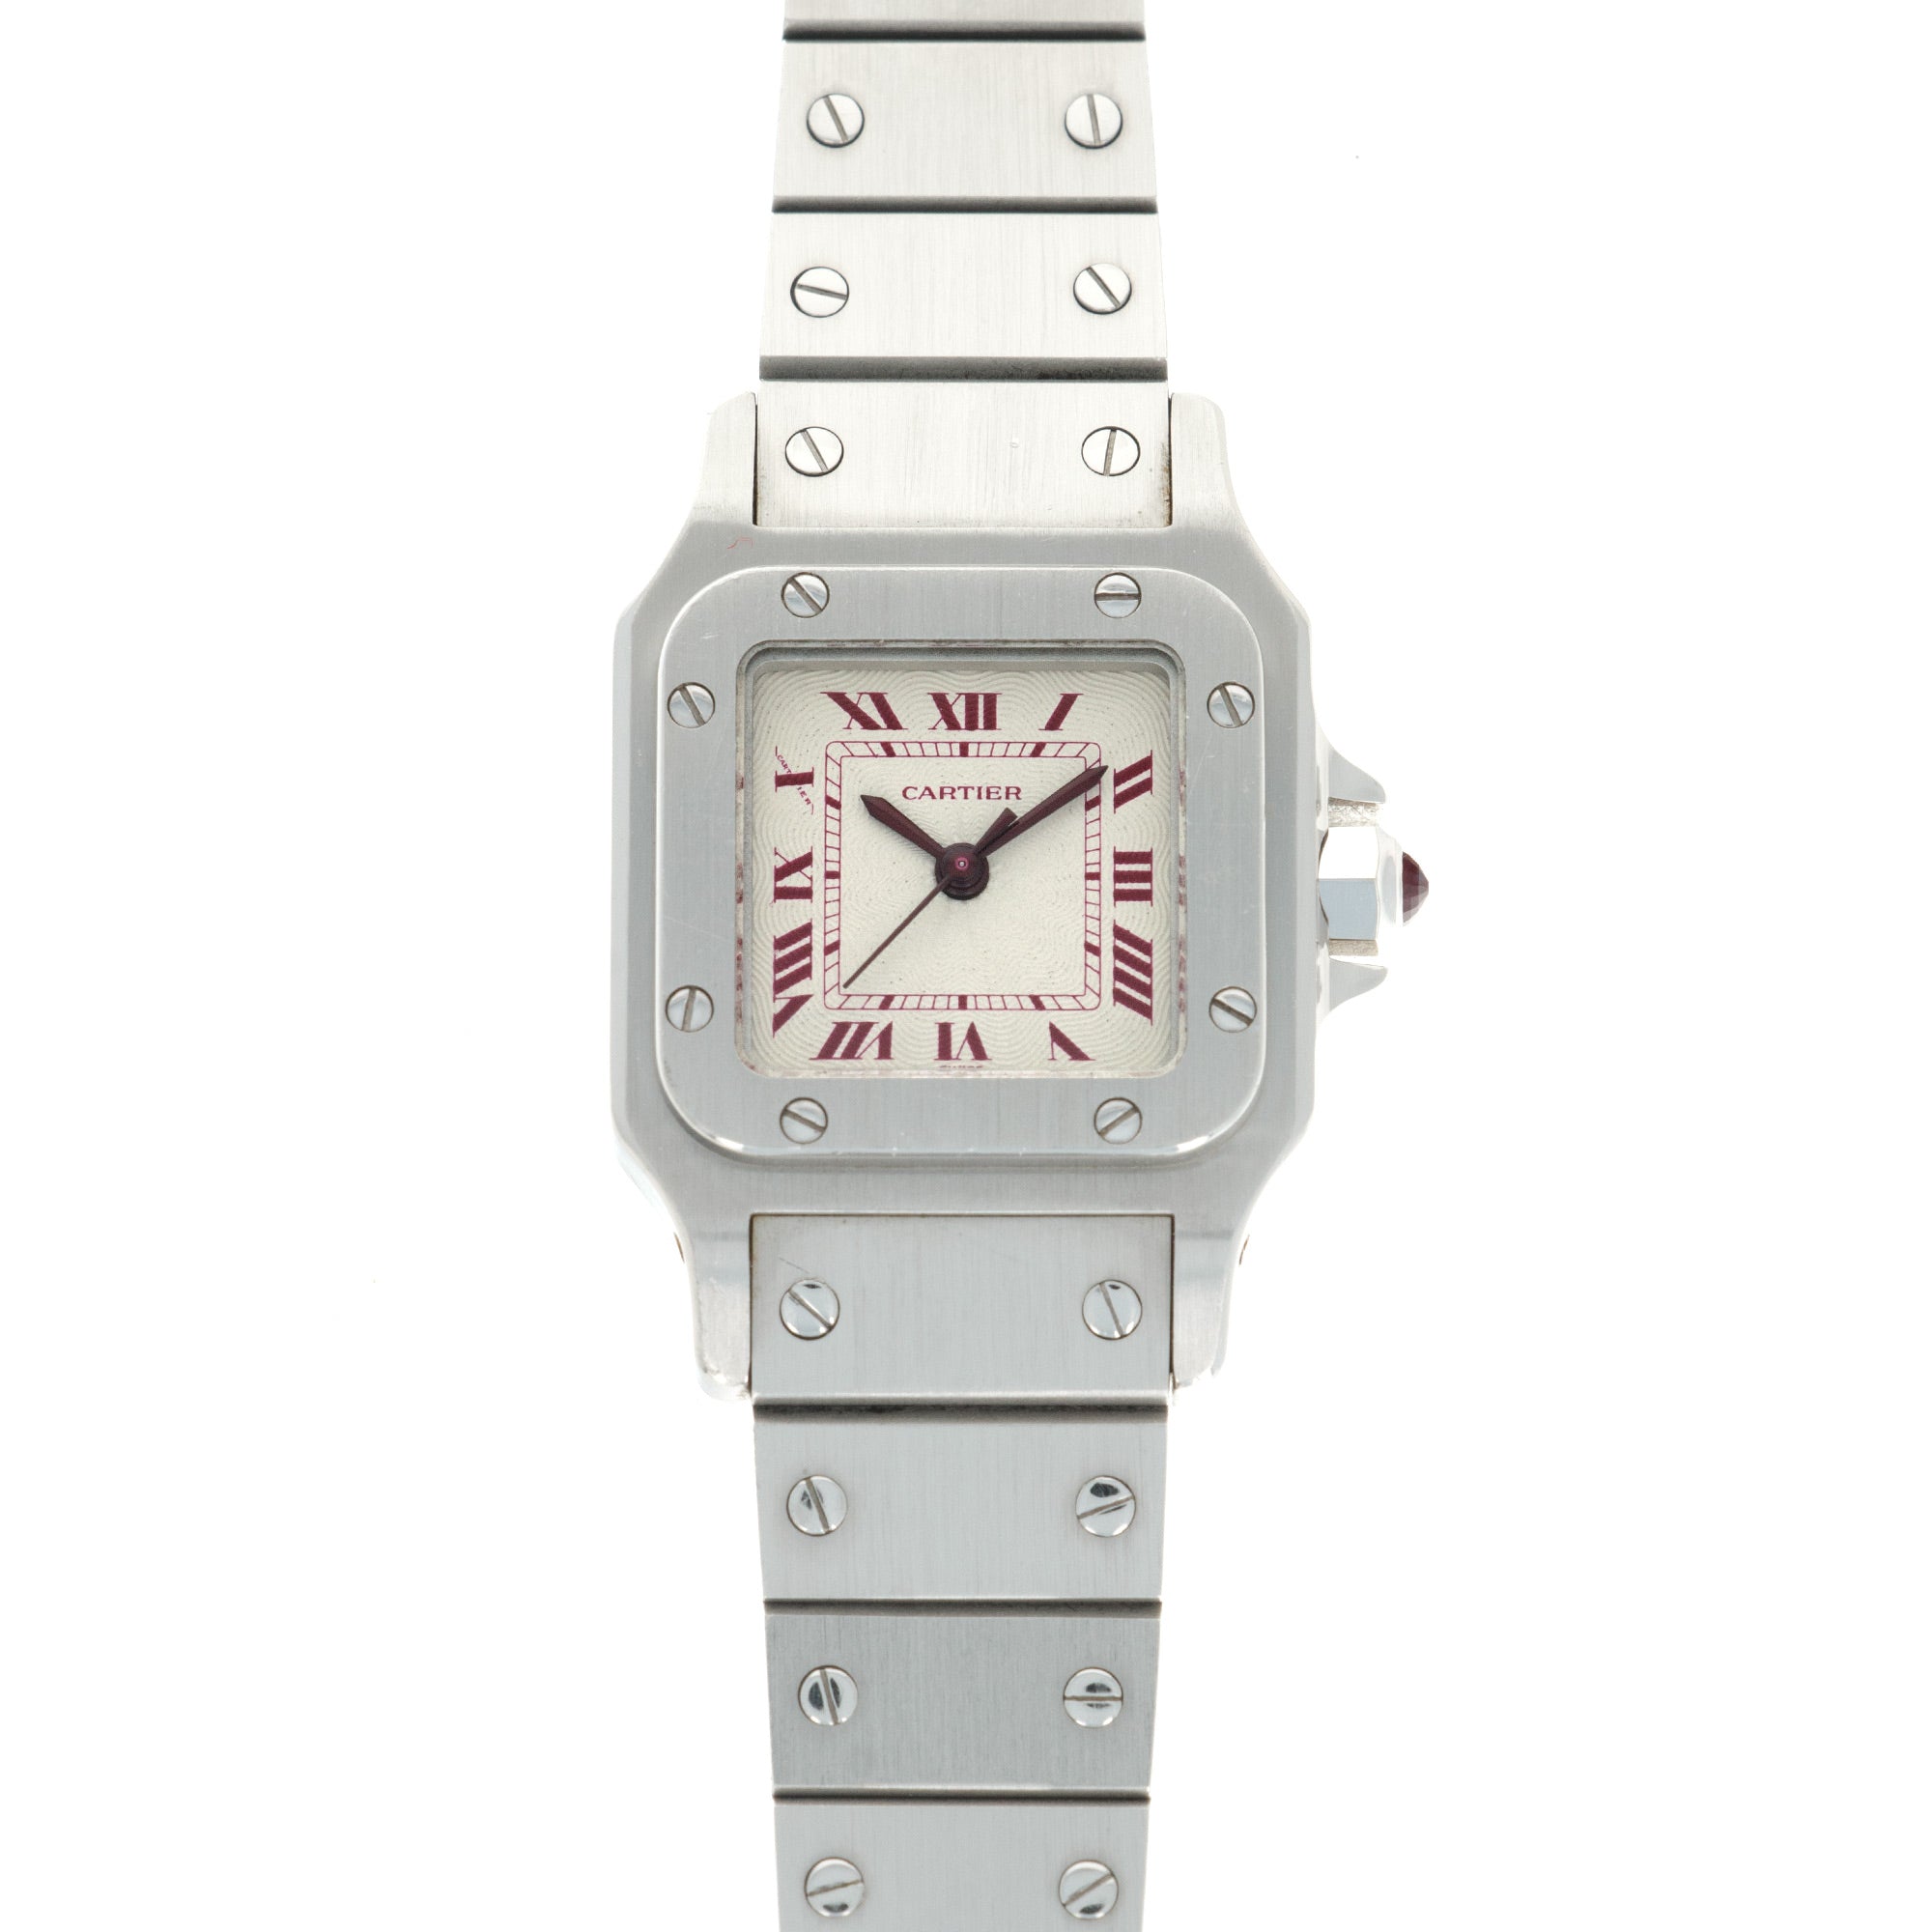 Cartier - Cartier Platinum Santos Automatic Watch, 1979 - The Keystone Watches